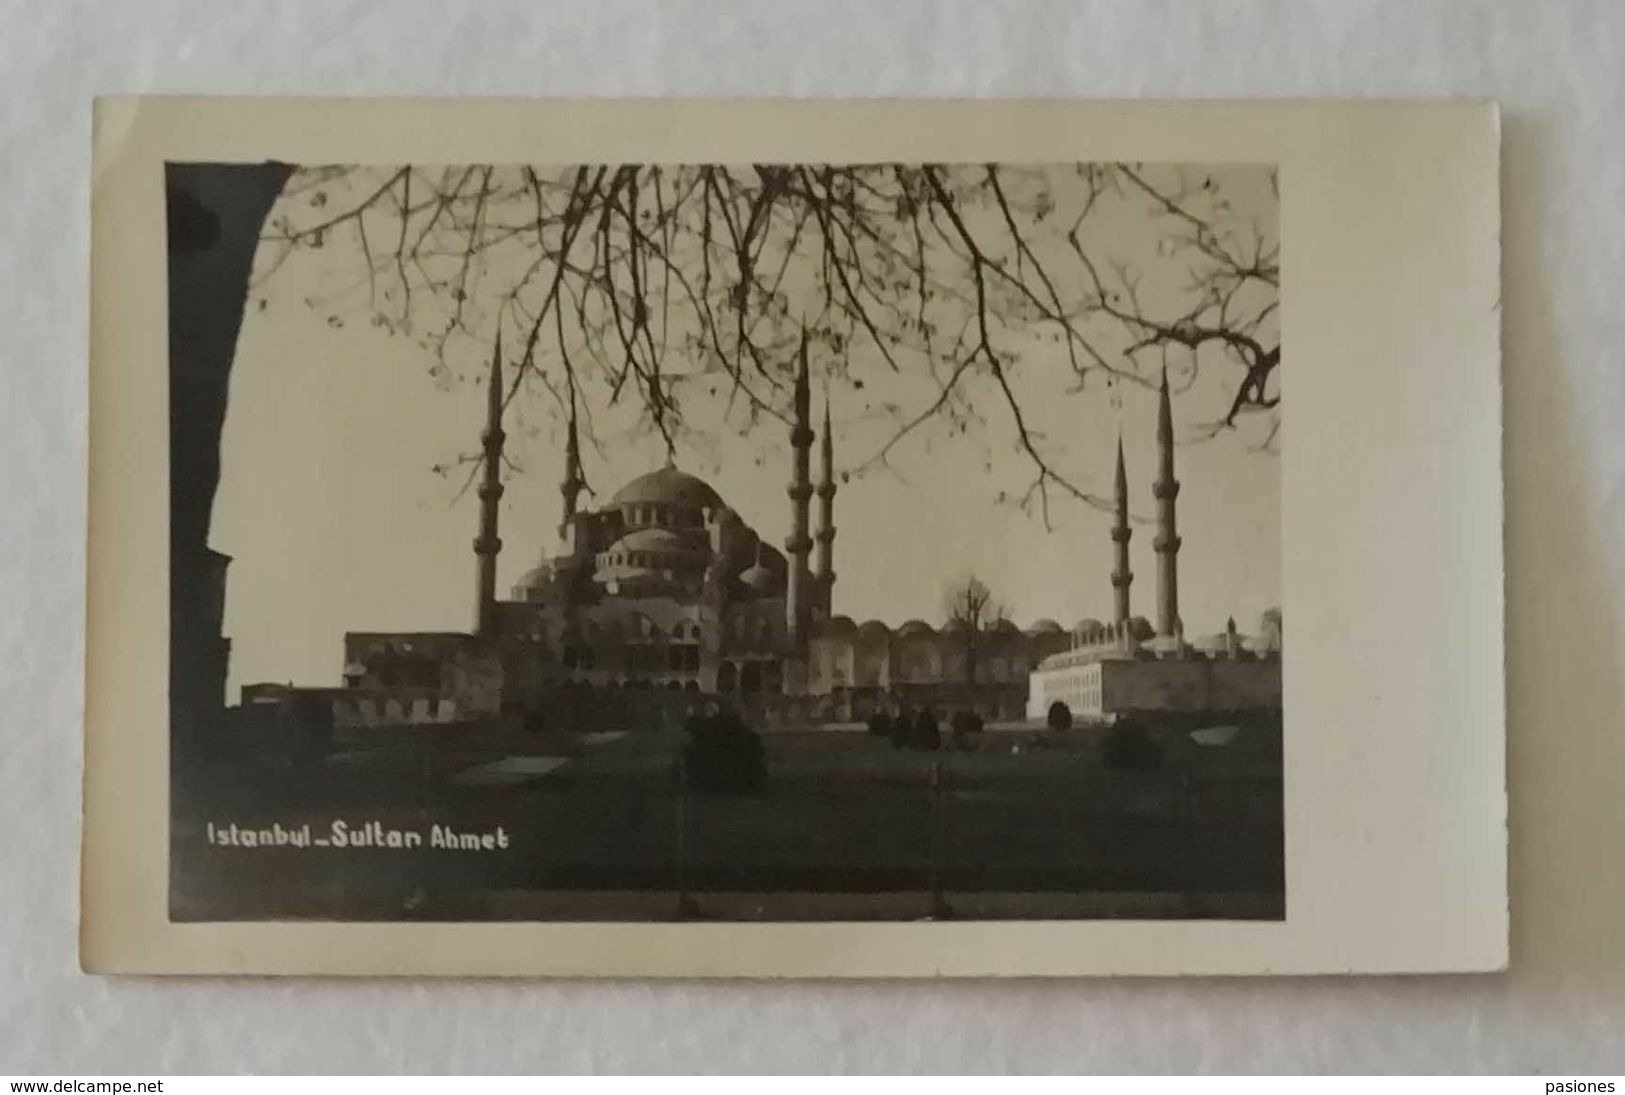 Cartolina Illustrata Da Istanbul Per Bâle (CH) 1948 - Lettres & Documents